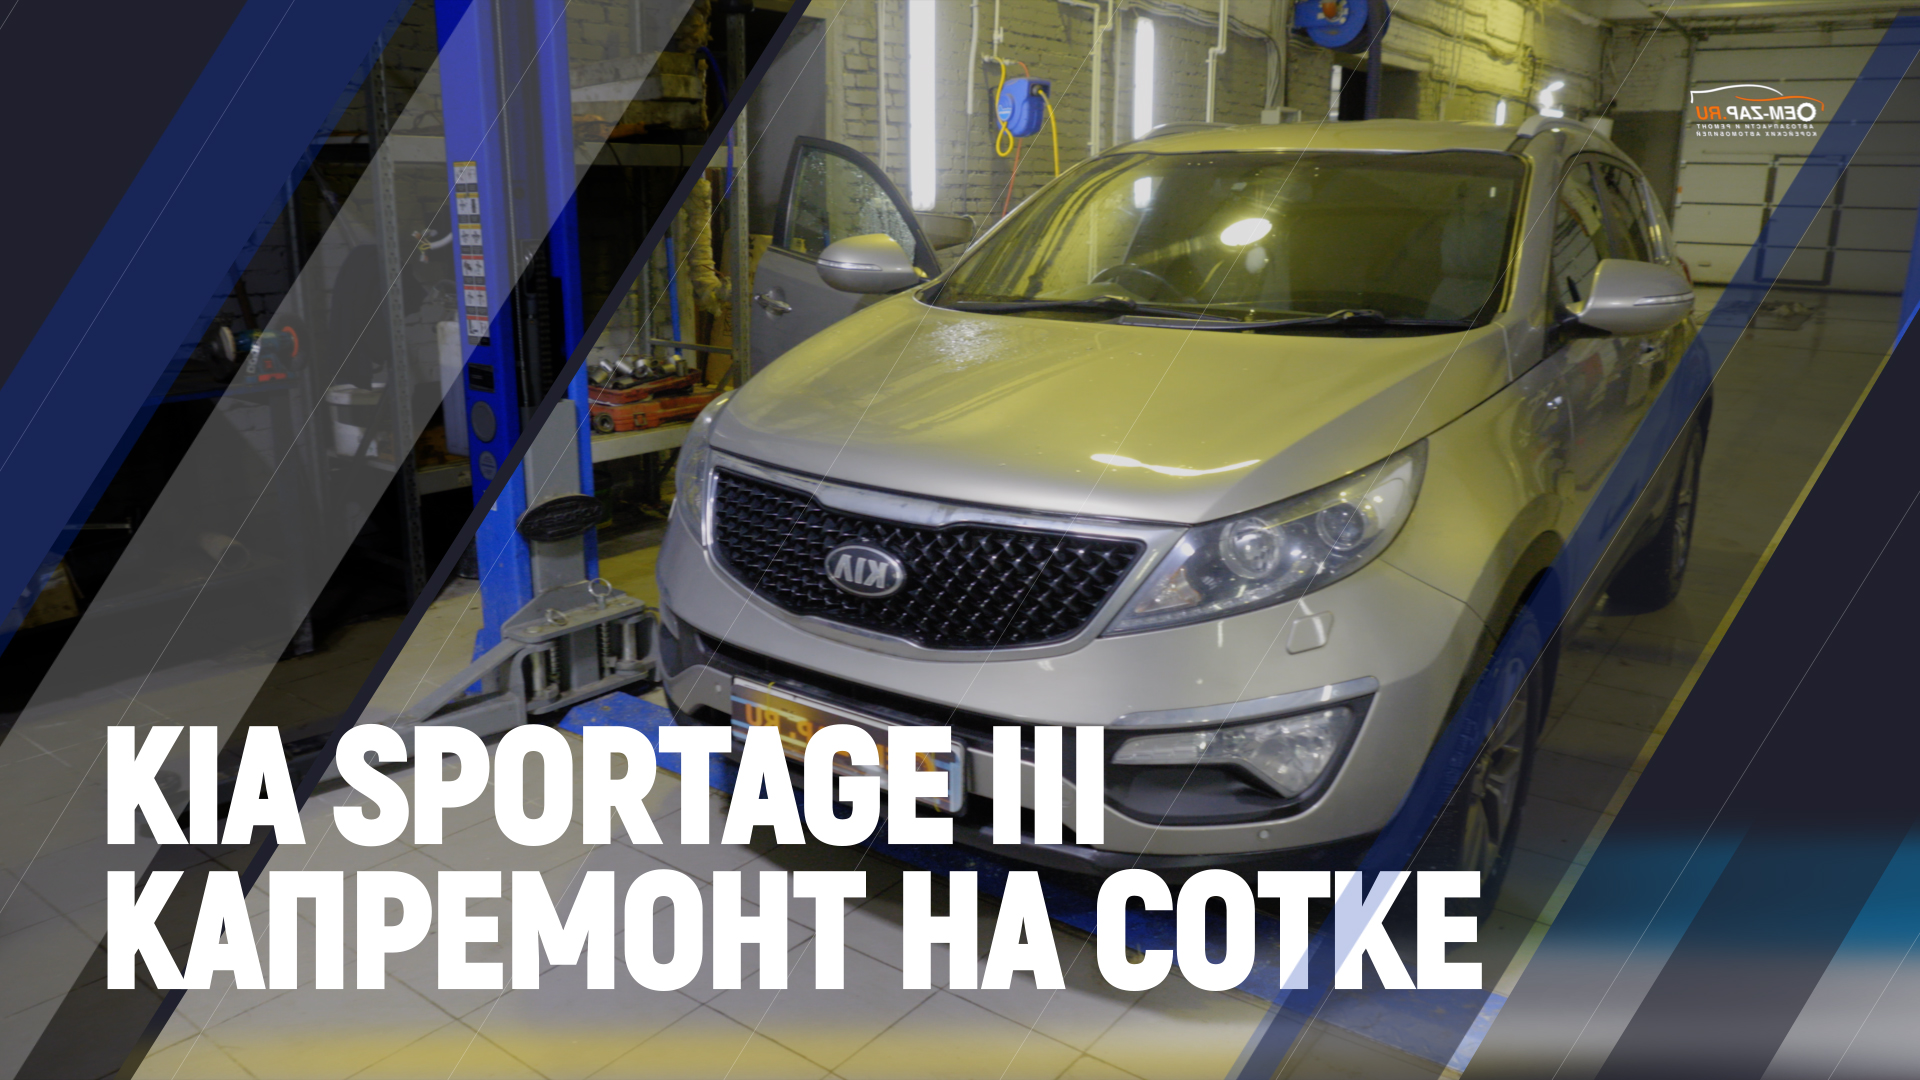 Kia Sportage III капремонт на сотке!